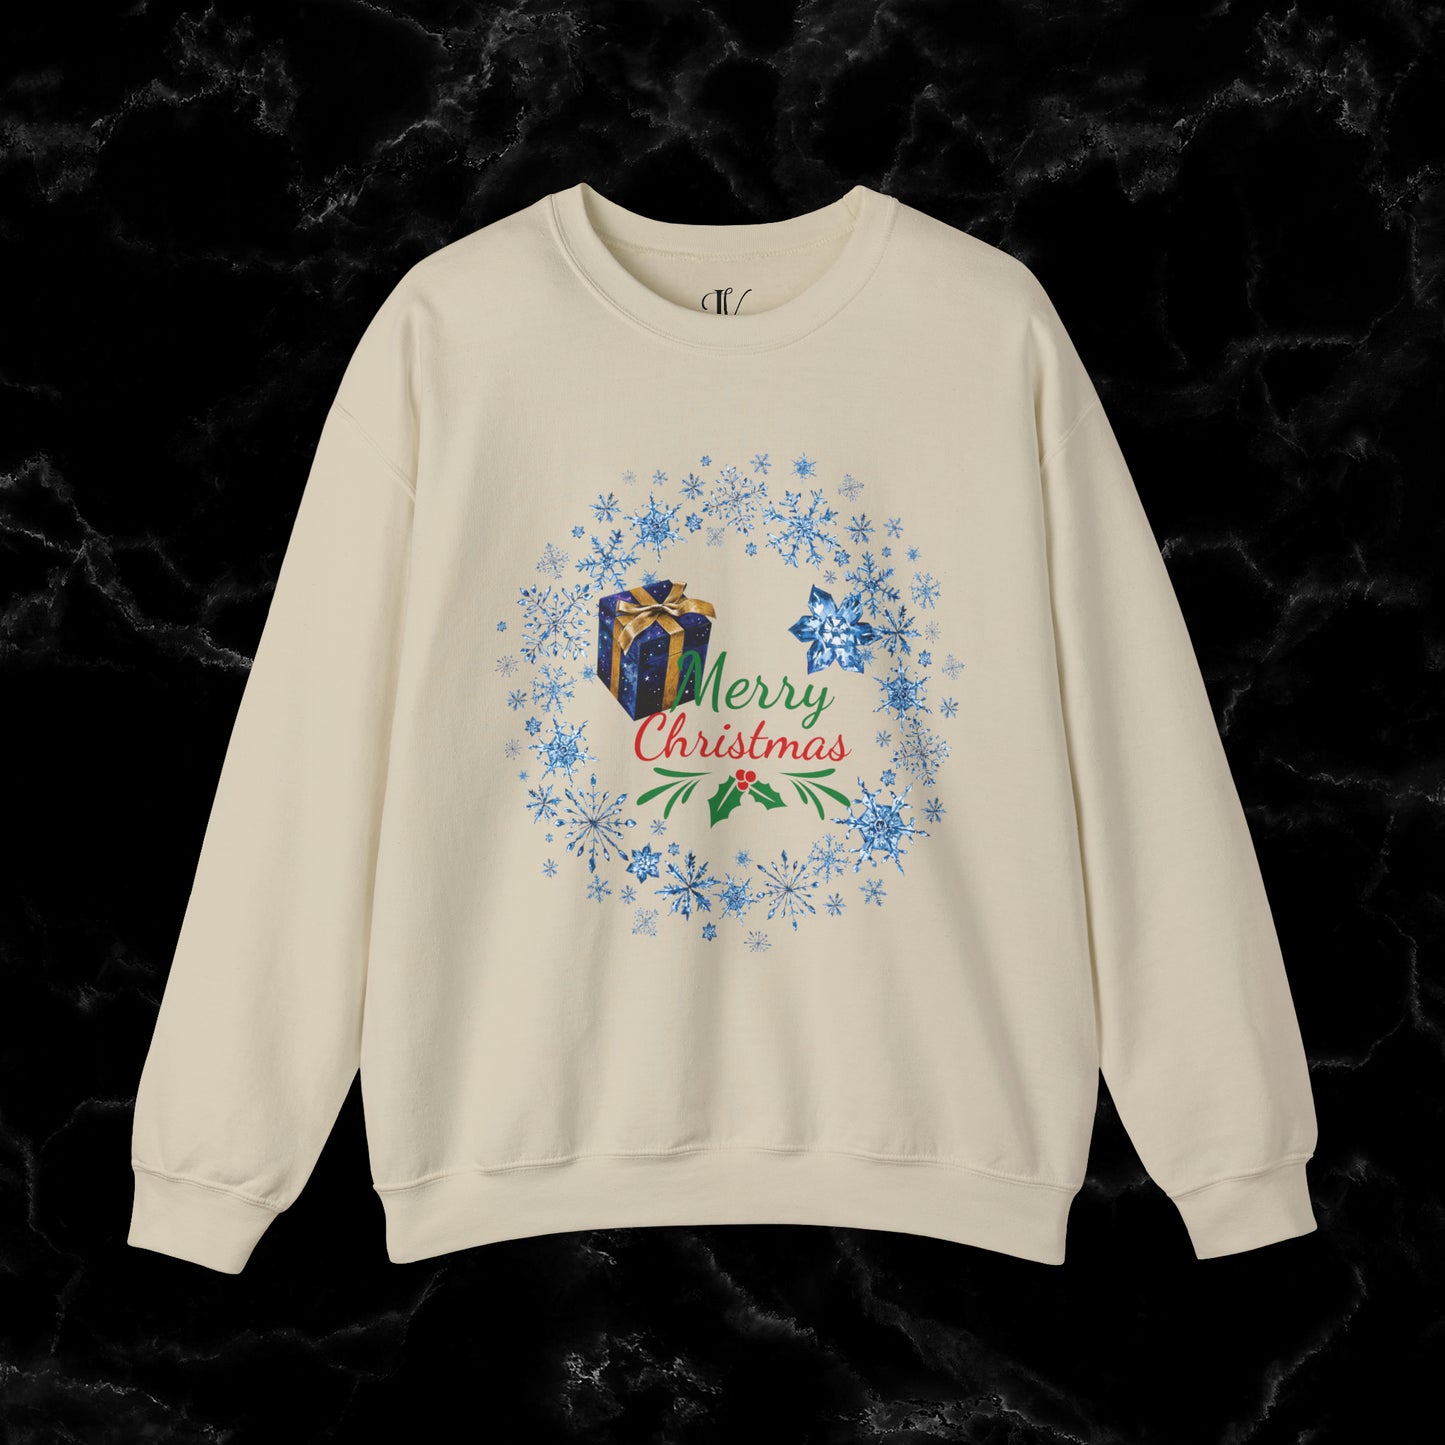 Merry Christmas Sweatshirt - Matching Christmas Shirt, Wreath Design, Holiday Gift Sweatshirt S Sand 